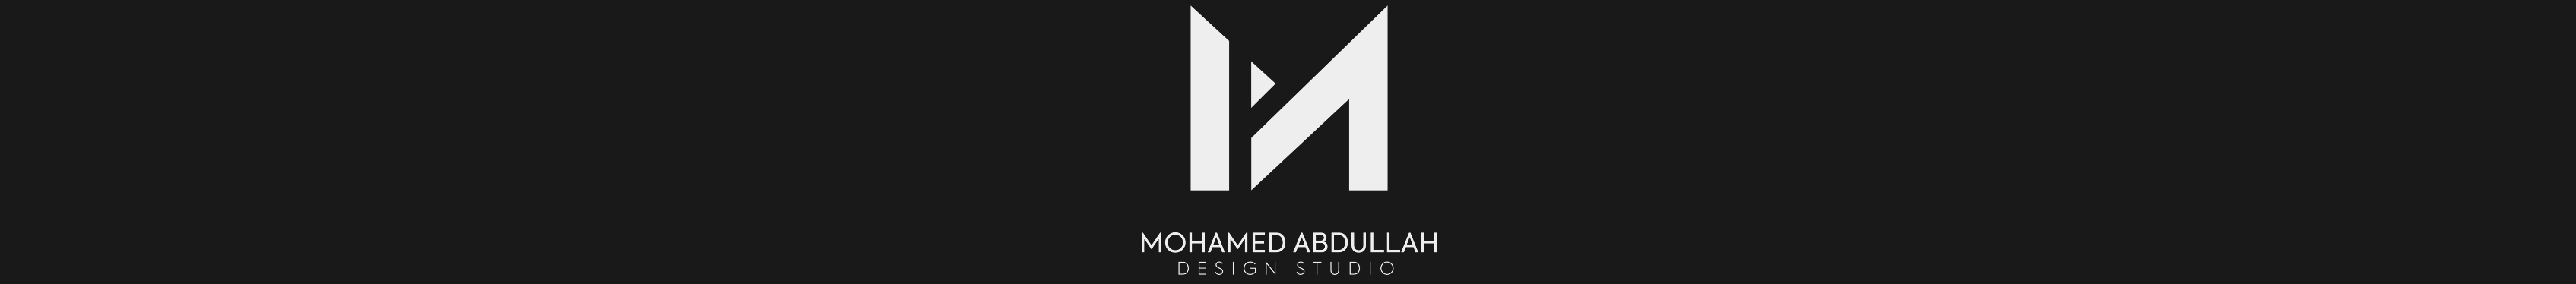 Muhammed Abdallah's profile banner